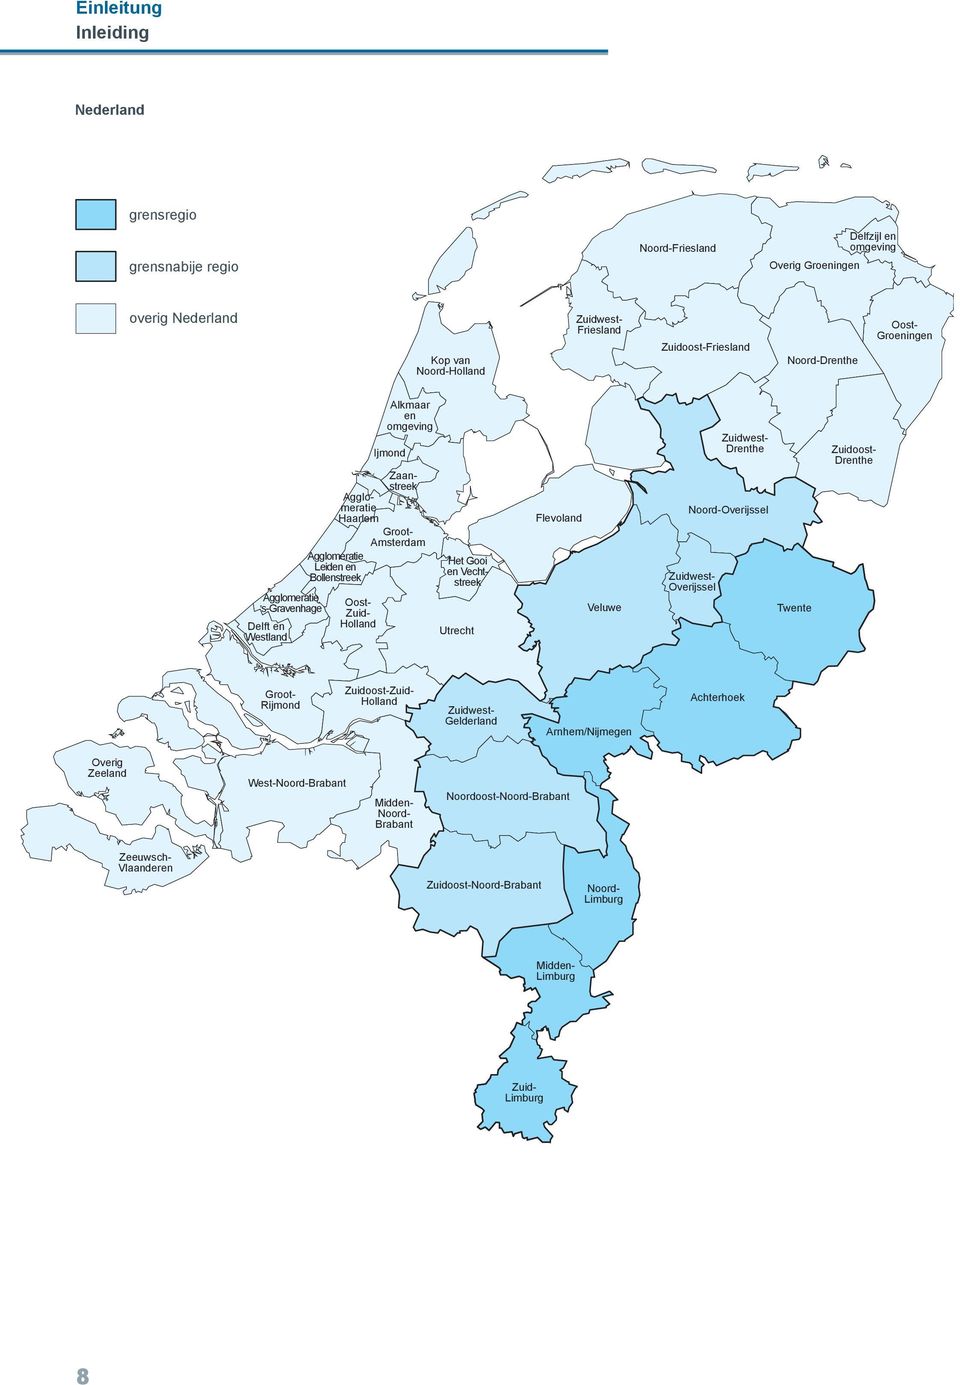 Ijmond Zaanstreek Groot- Amsterdam Utrecht Flevoland Veluwe Zuidwest- Drenthe Noord-Overijssel Zuidwest- Overijssel Twente Zuidoost- Drenthe Groot- Rijmond Zuidoost-Zuid- Holland Zuidwest-